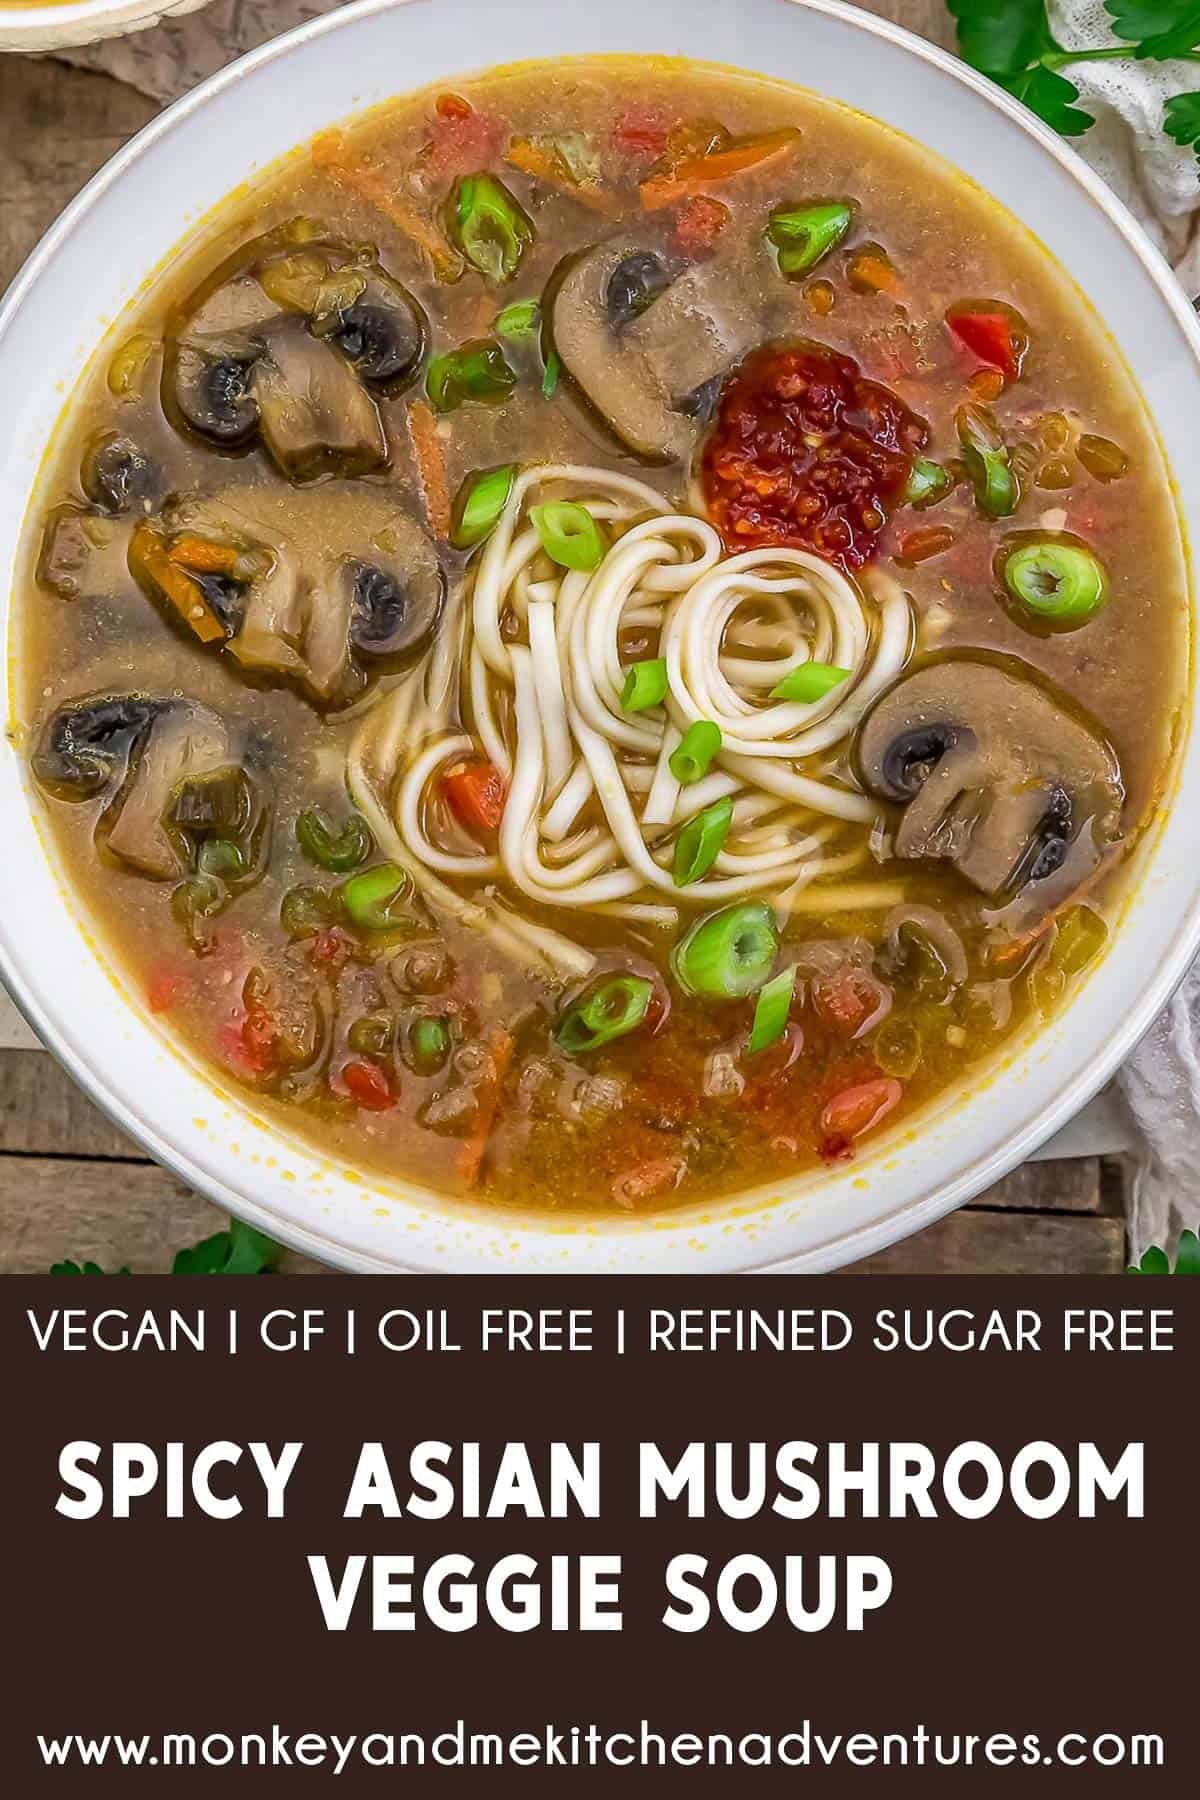 Spicy Asian Mushroom Veggie Soup with text description